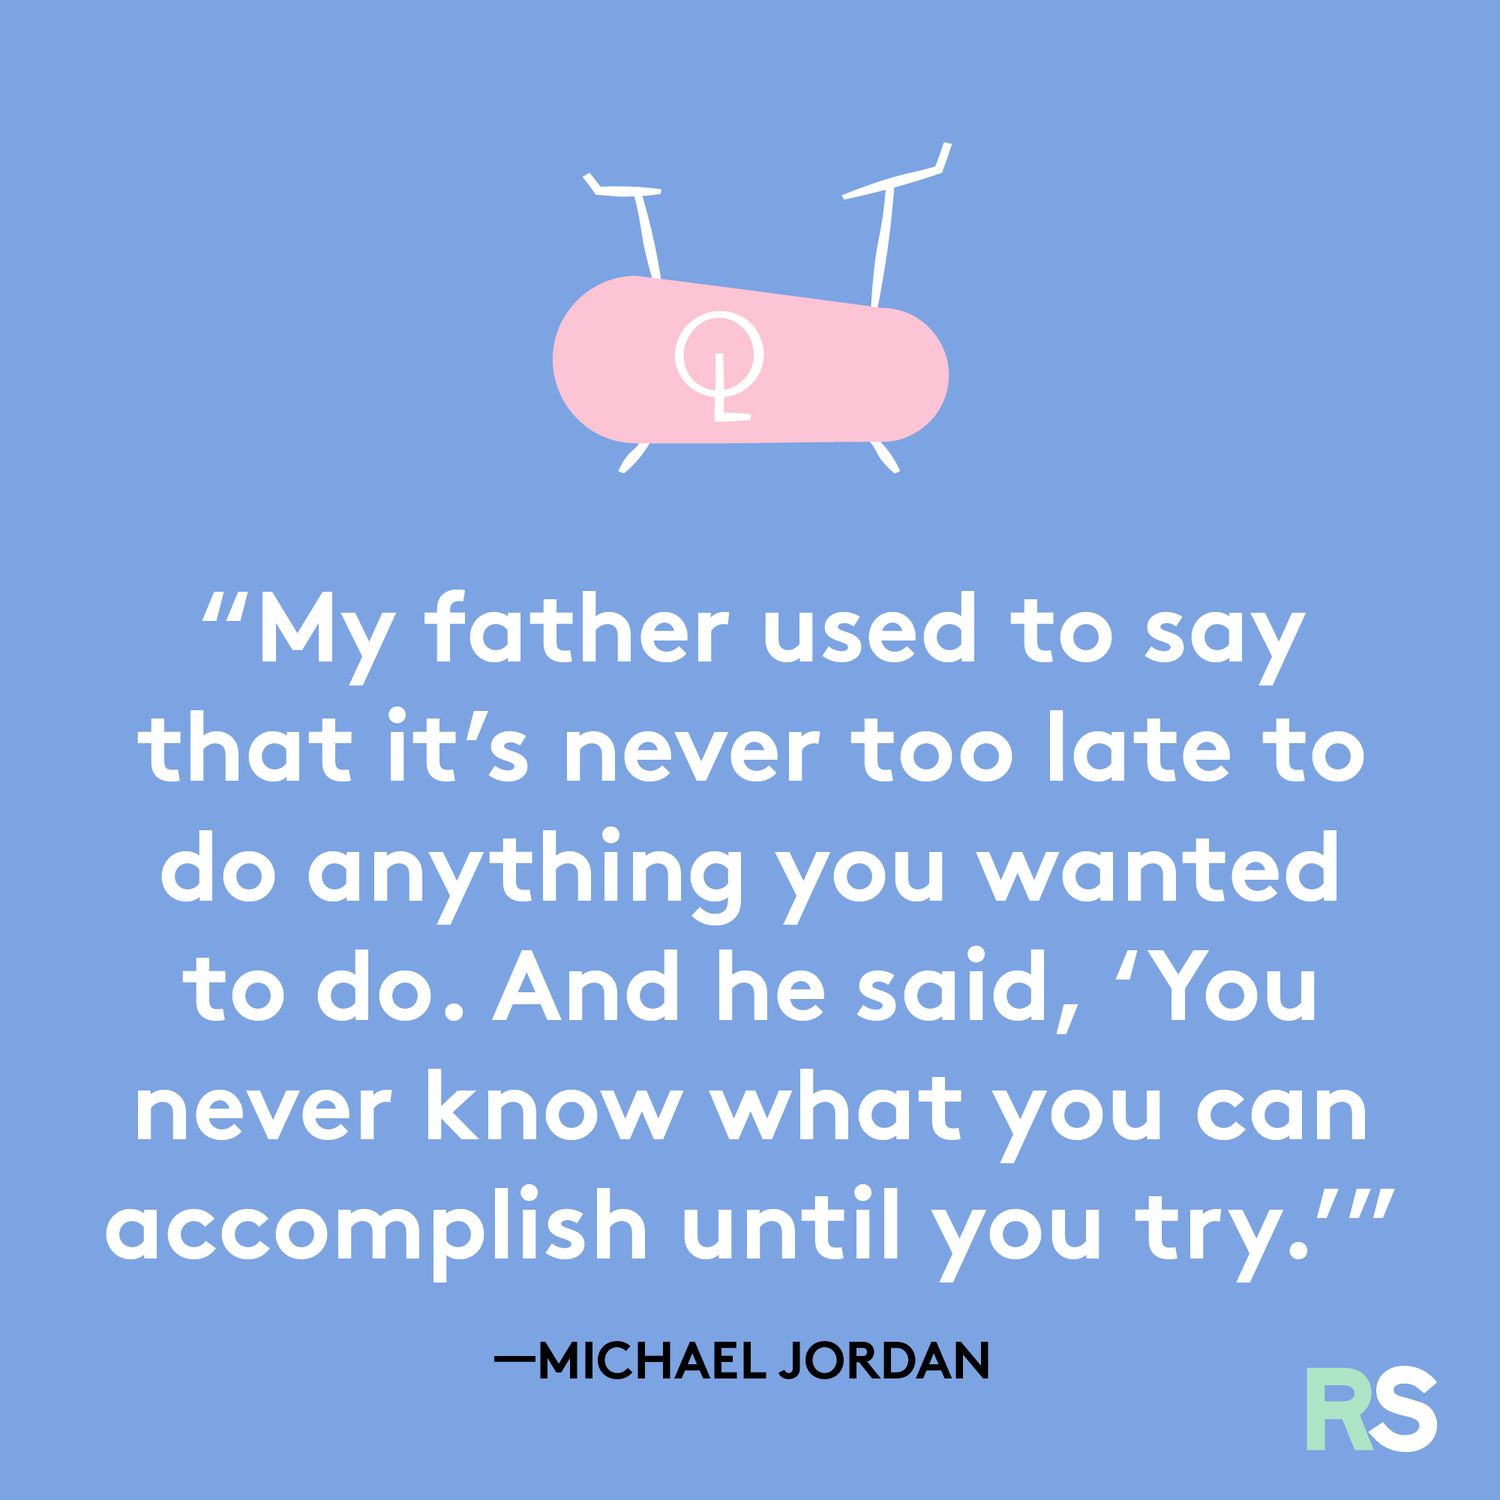 Michael Jordan motivational quote